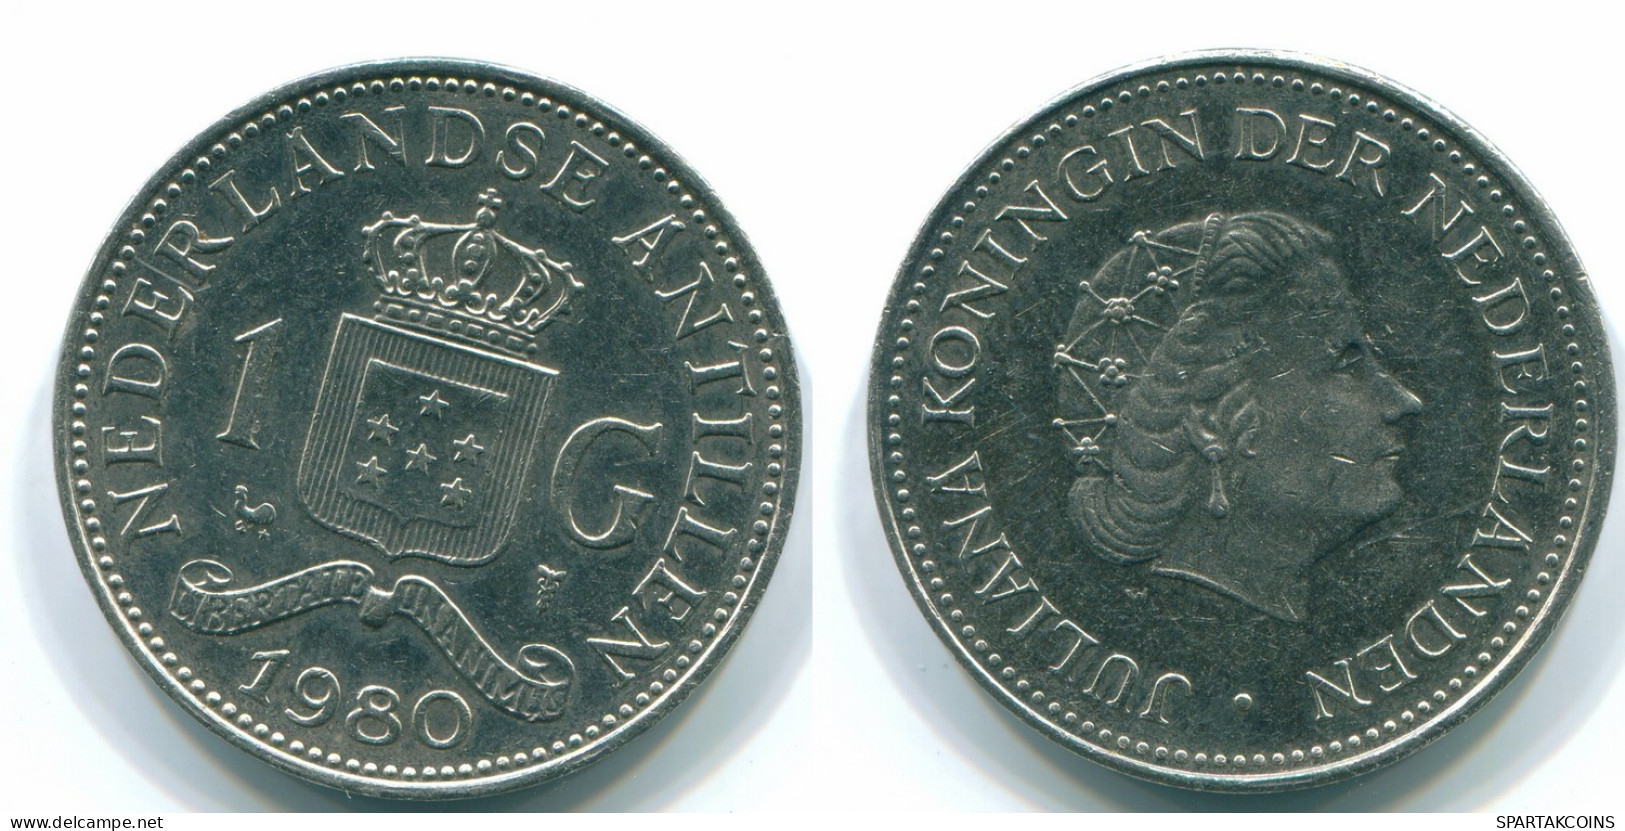 1 GULDEN 1980 NETHERLANDS ANTILLES Nickel Colonial Coin #S12041.U.A - Antille Olandesi